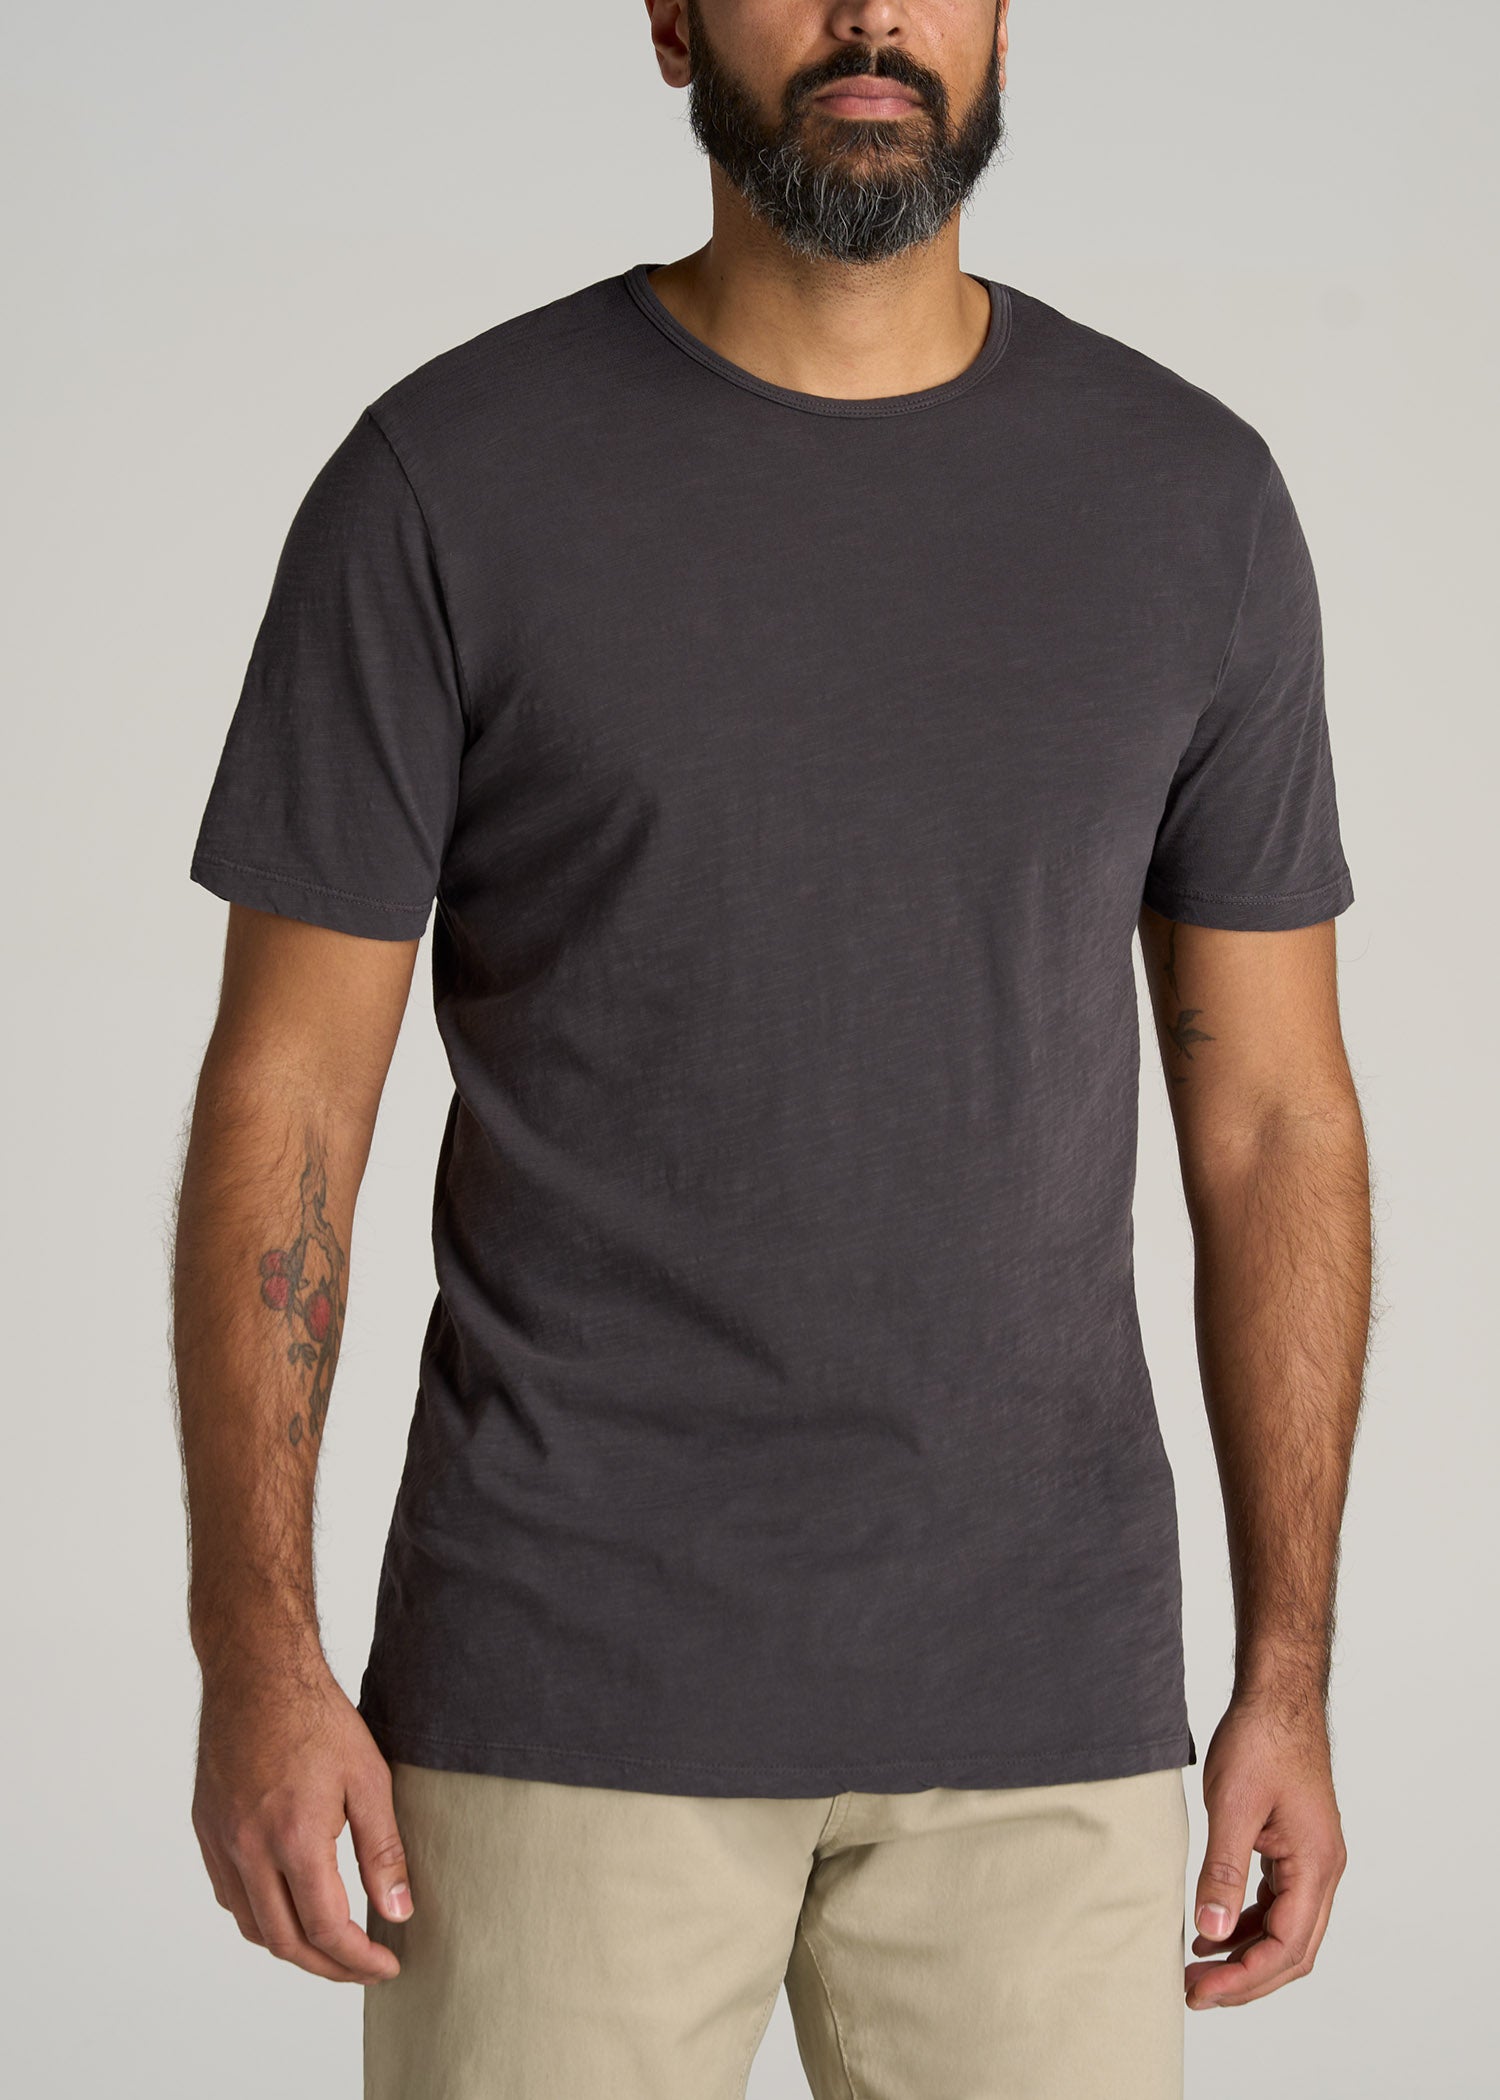 Best T-Shirts for Tall Slim Men - American Tall Slim Tees